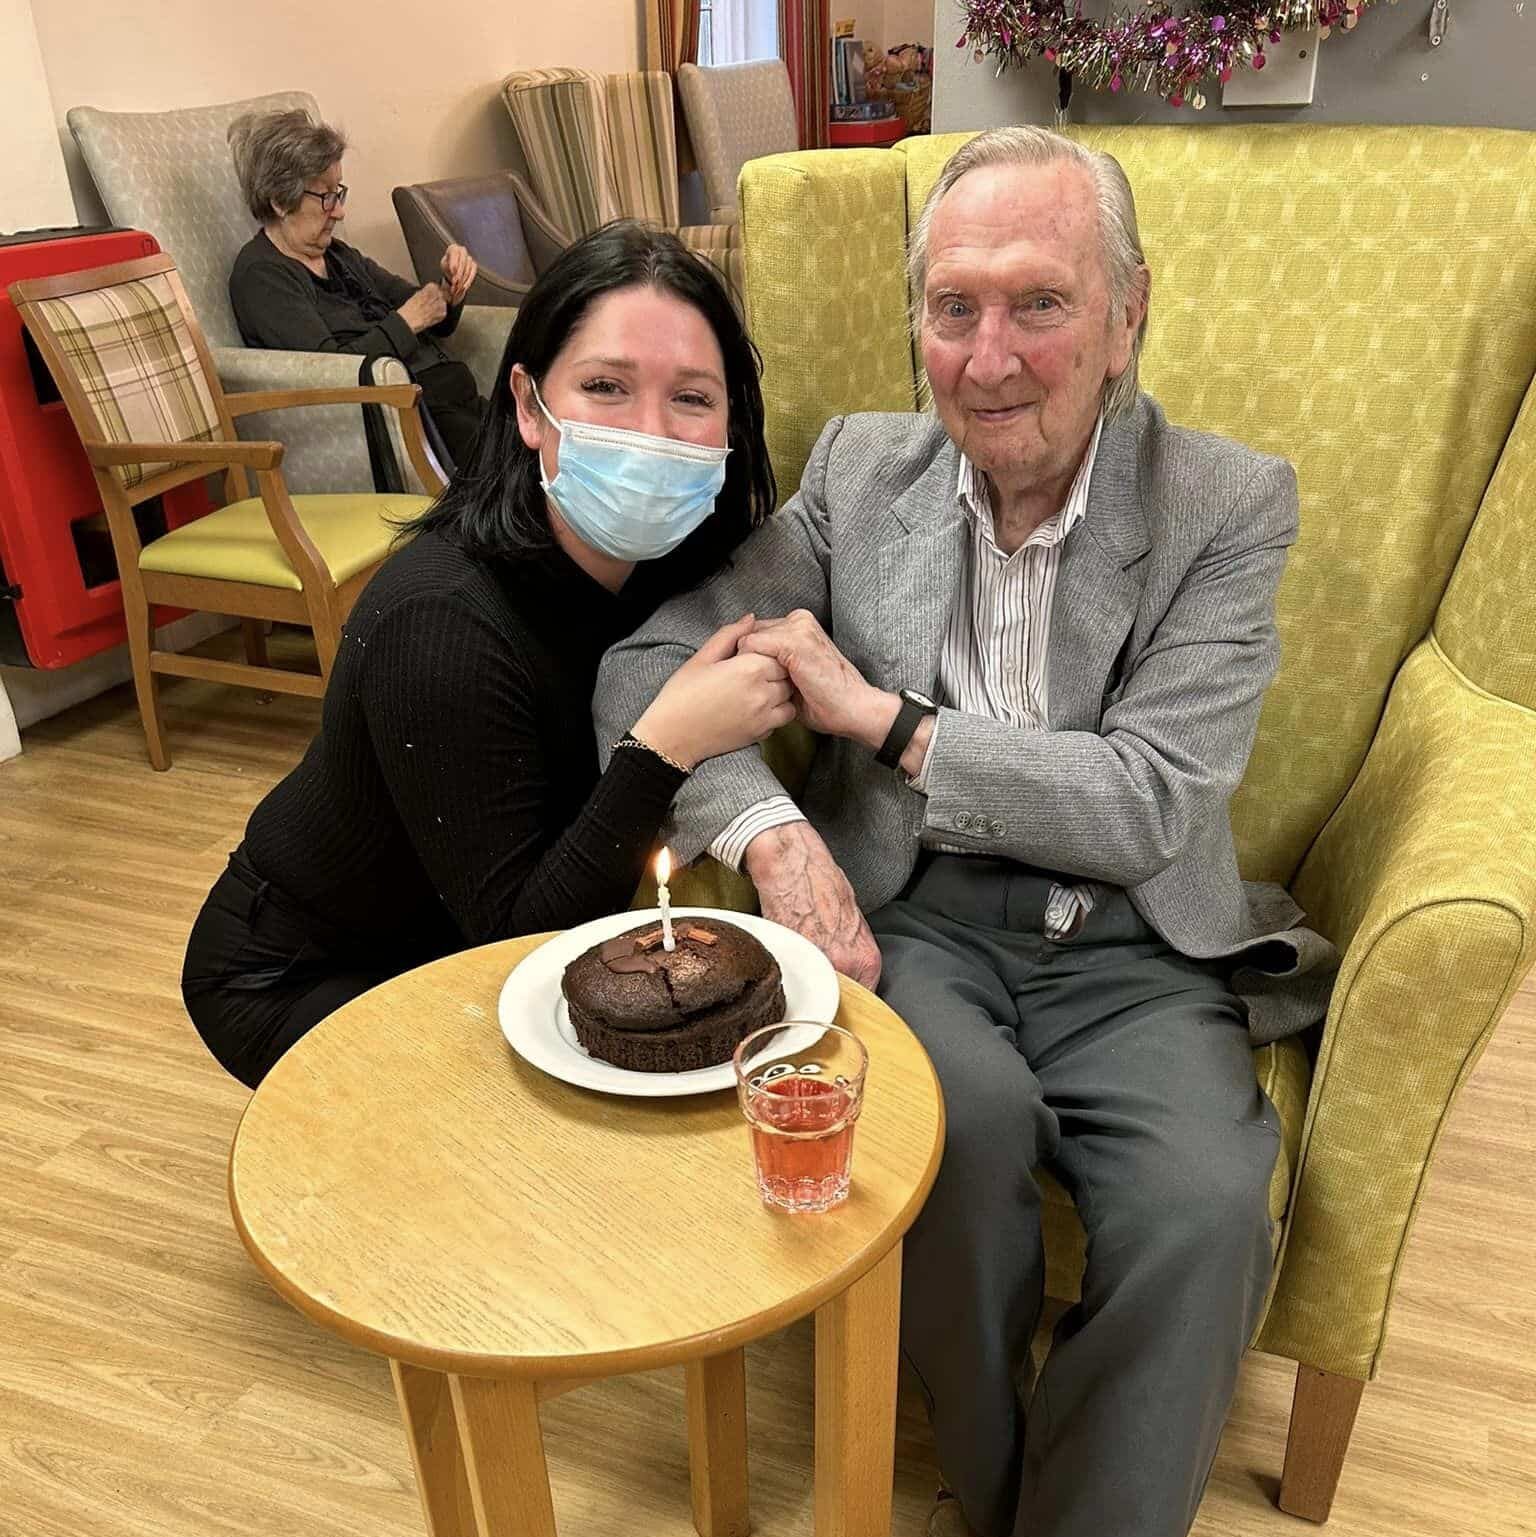 birthday celebrations - Hayley and gentleman with cake